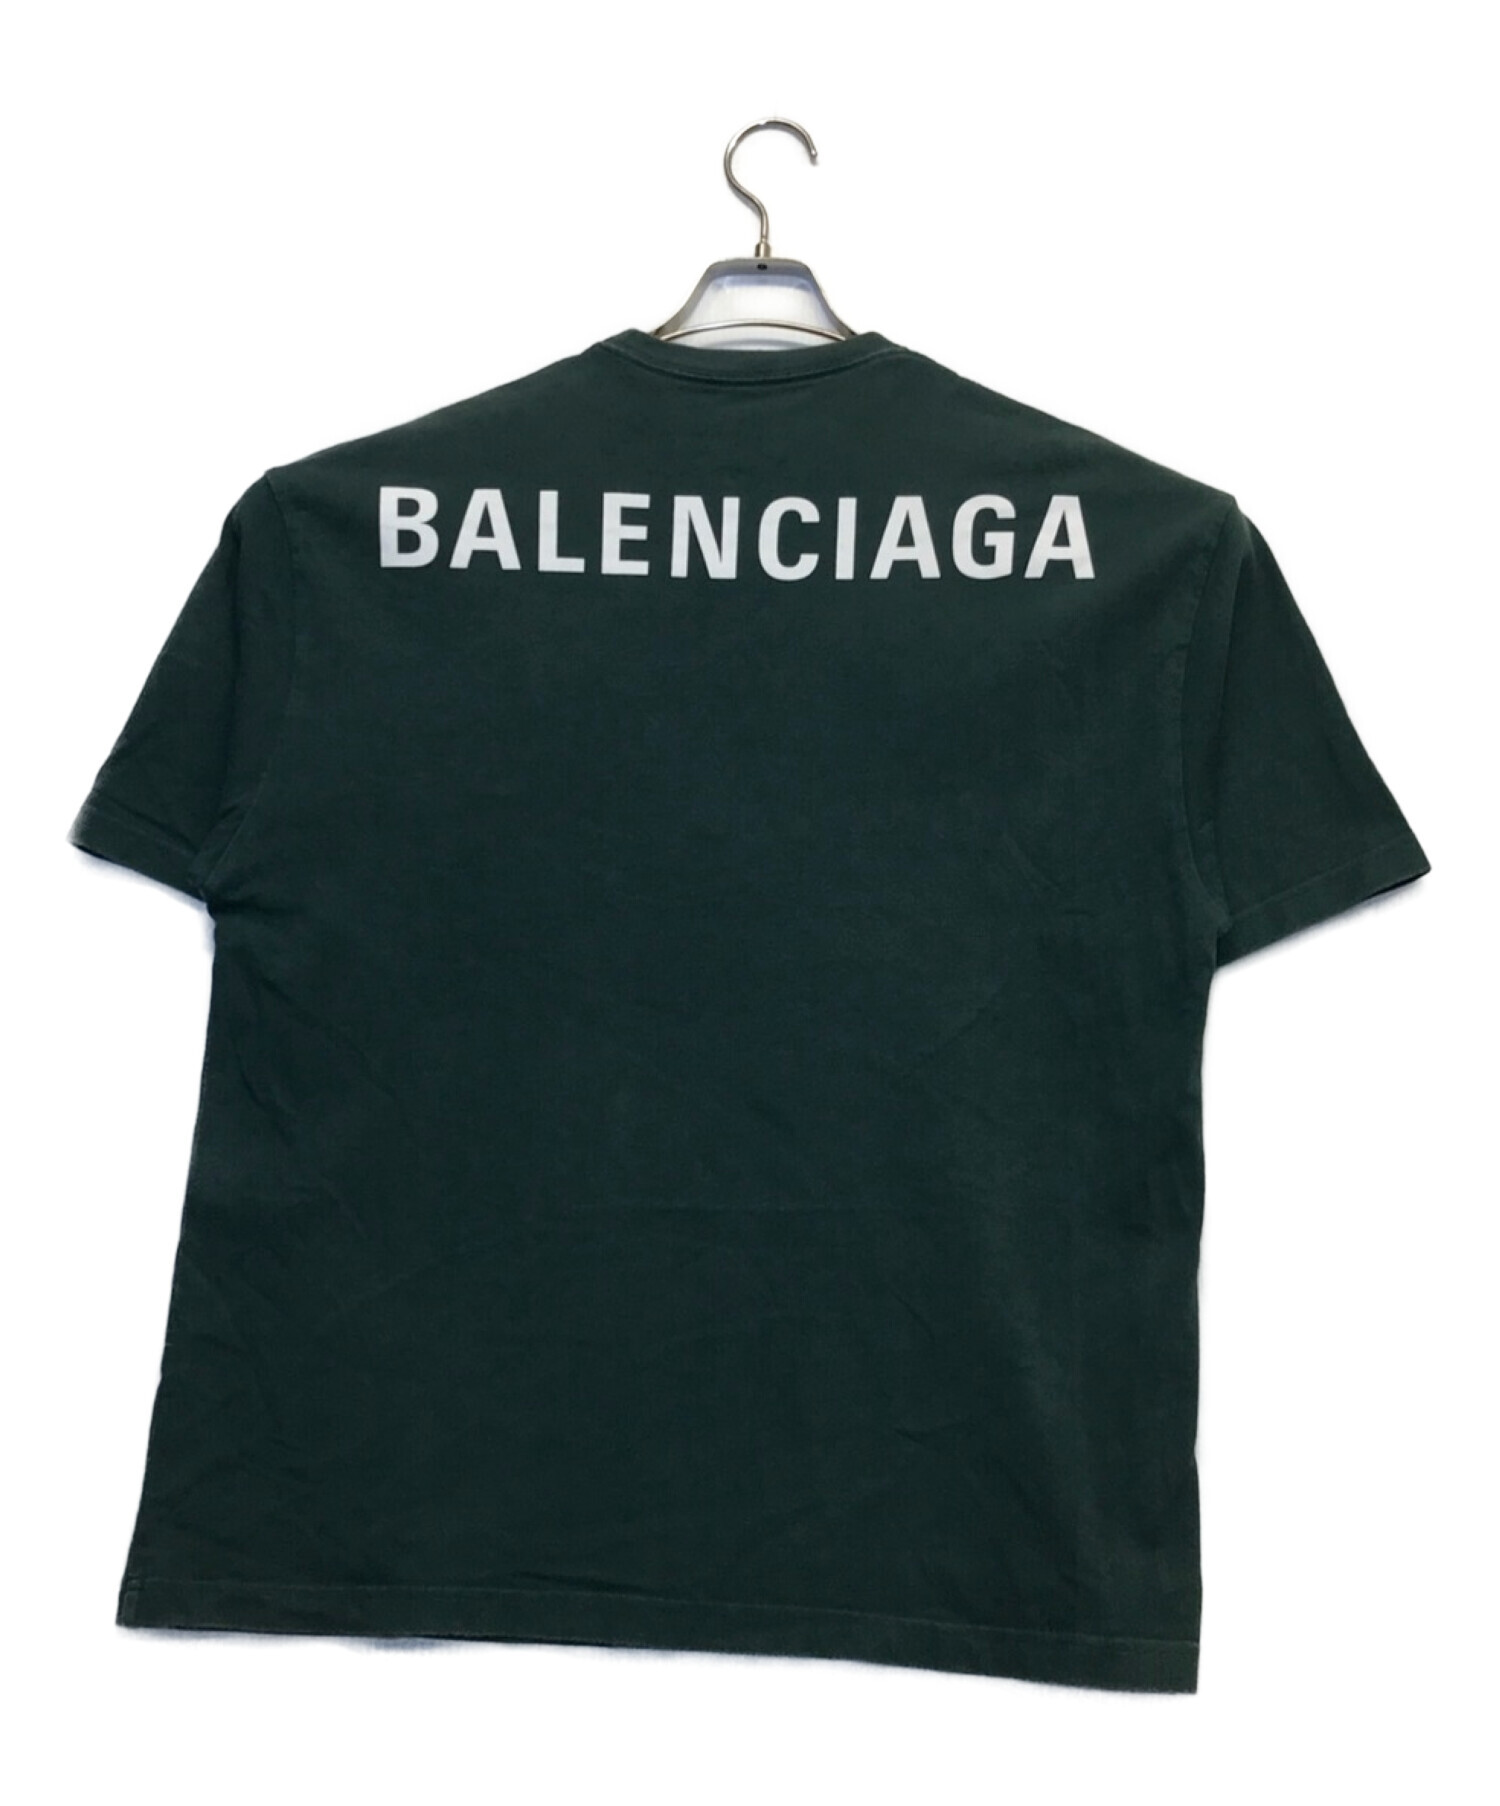 BALENCIAGA (バレンシアガ) バックプリントTシャツ グリーン サイズ:L